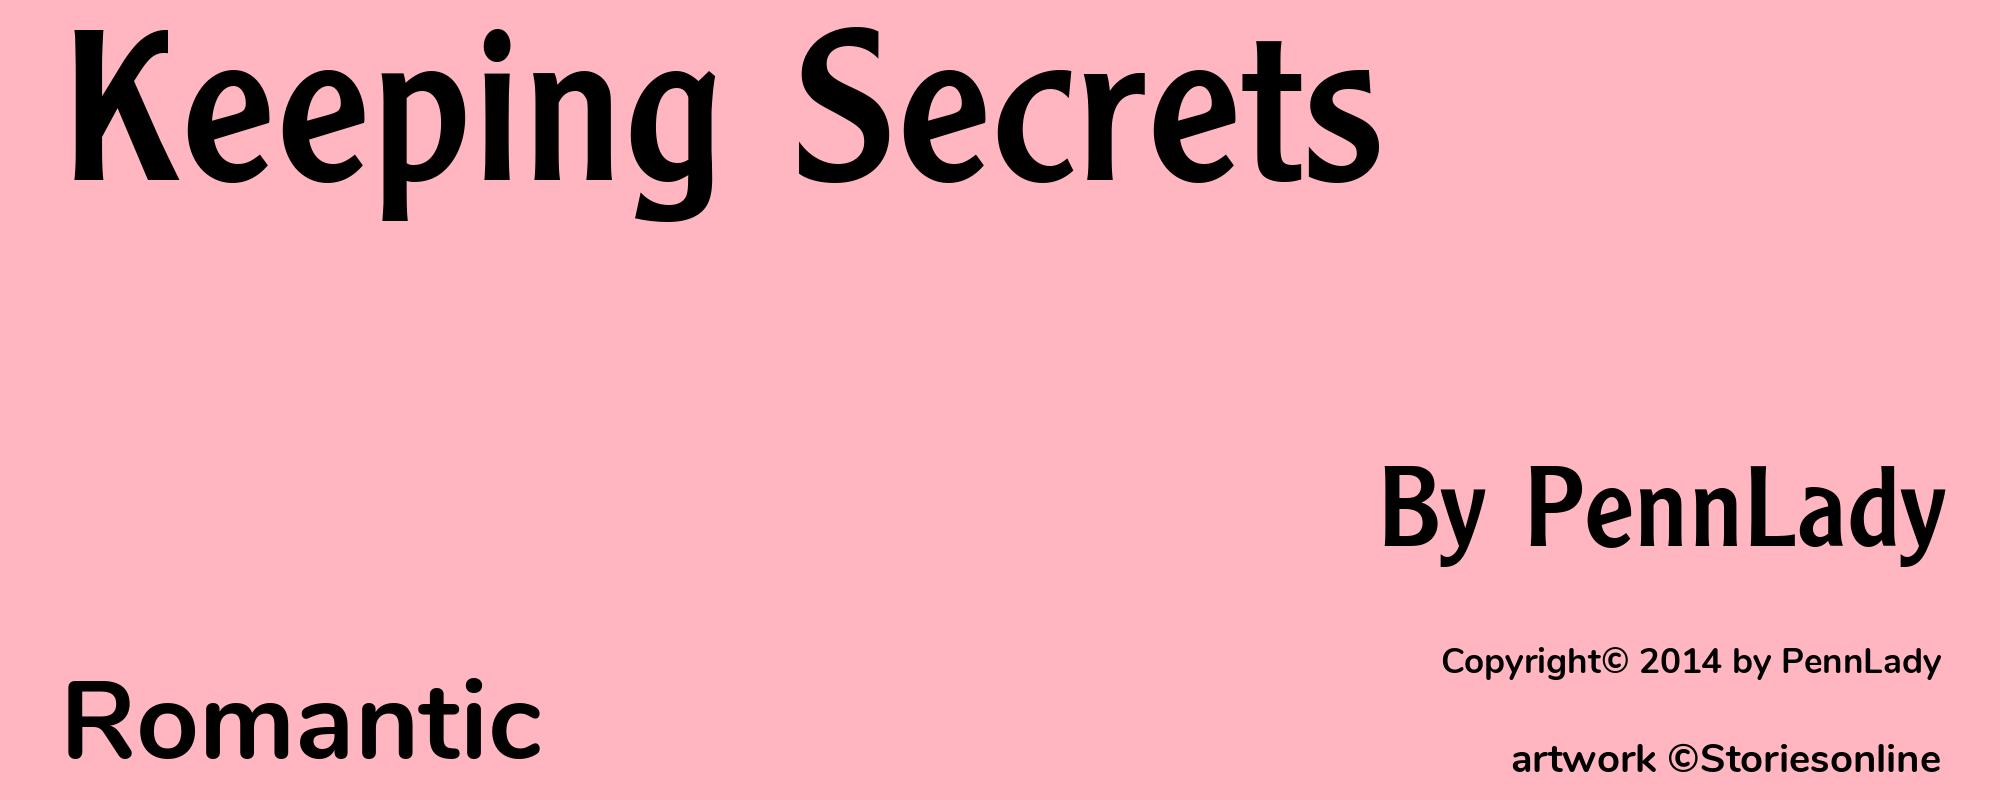 Keeping Secrets - Cover